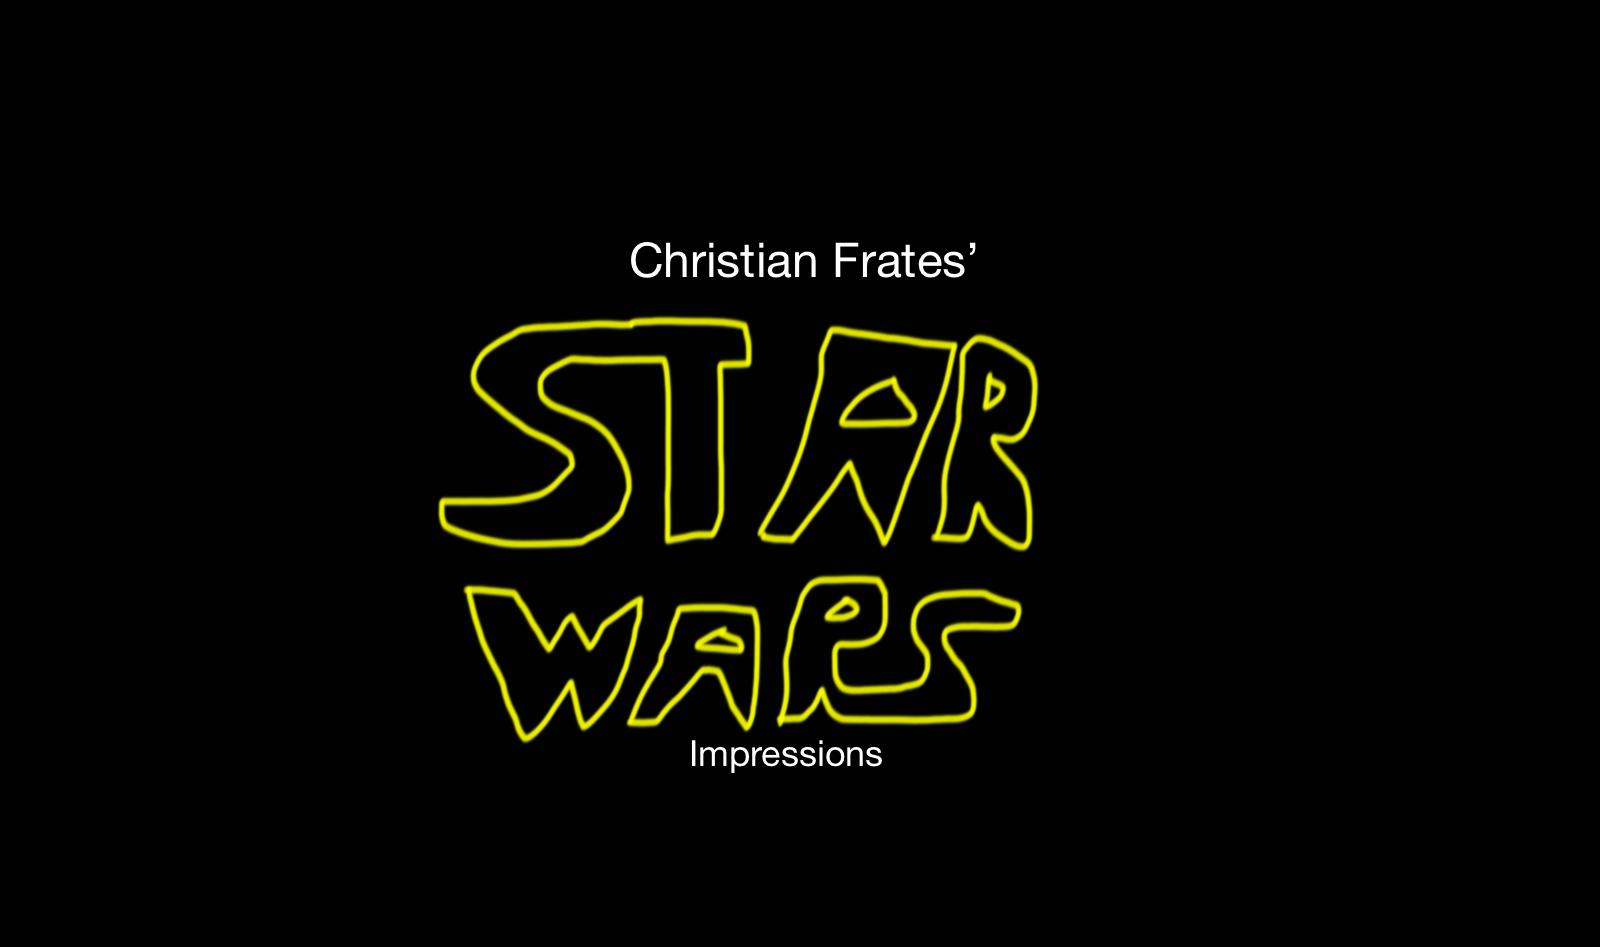 Christian Frates' Star Wars Impressions